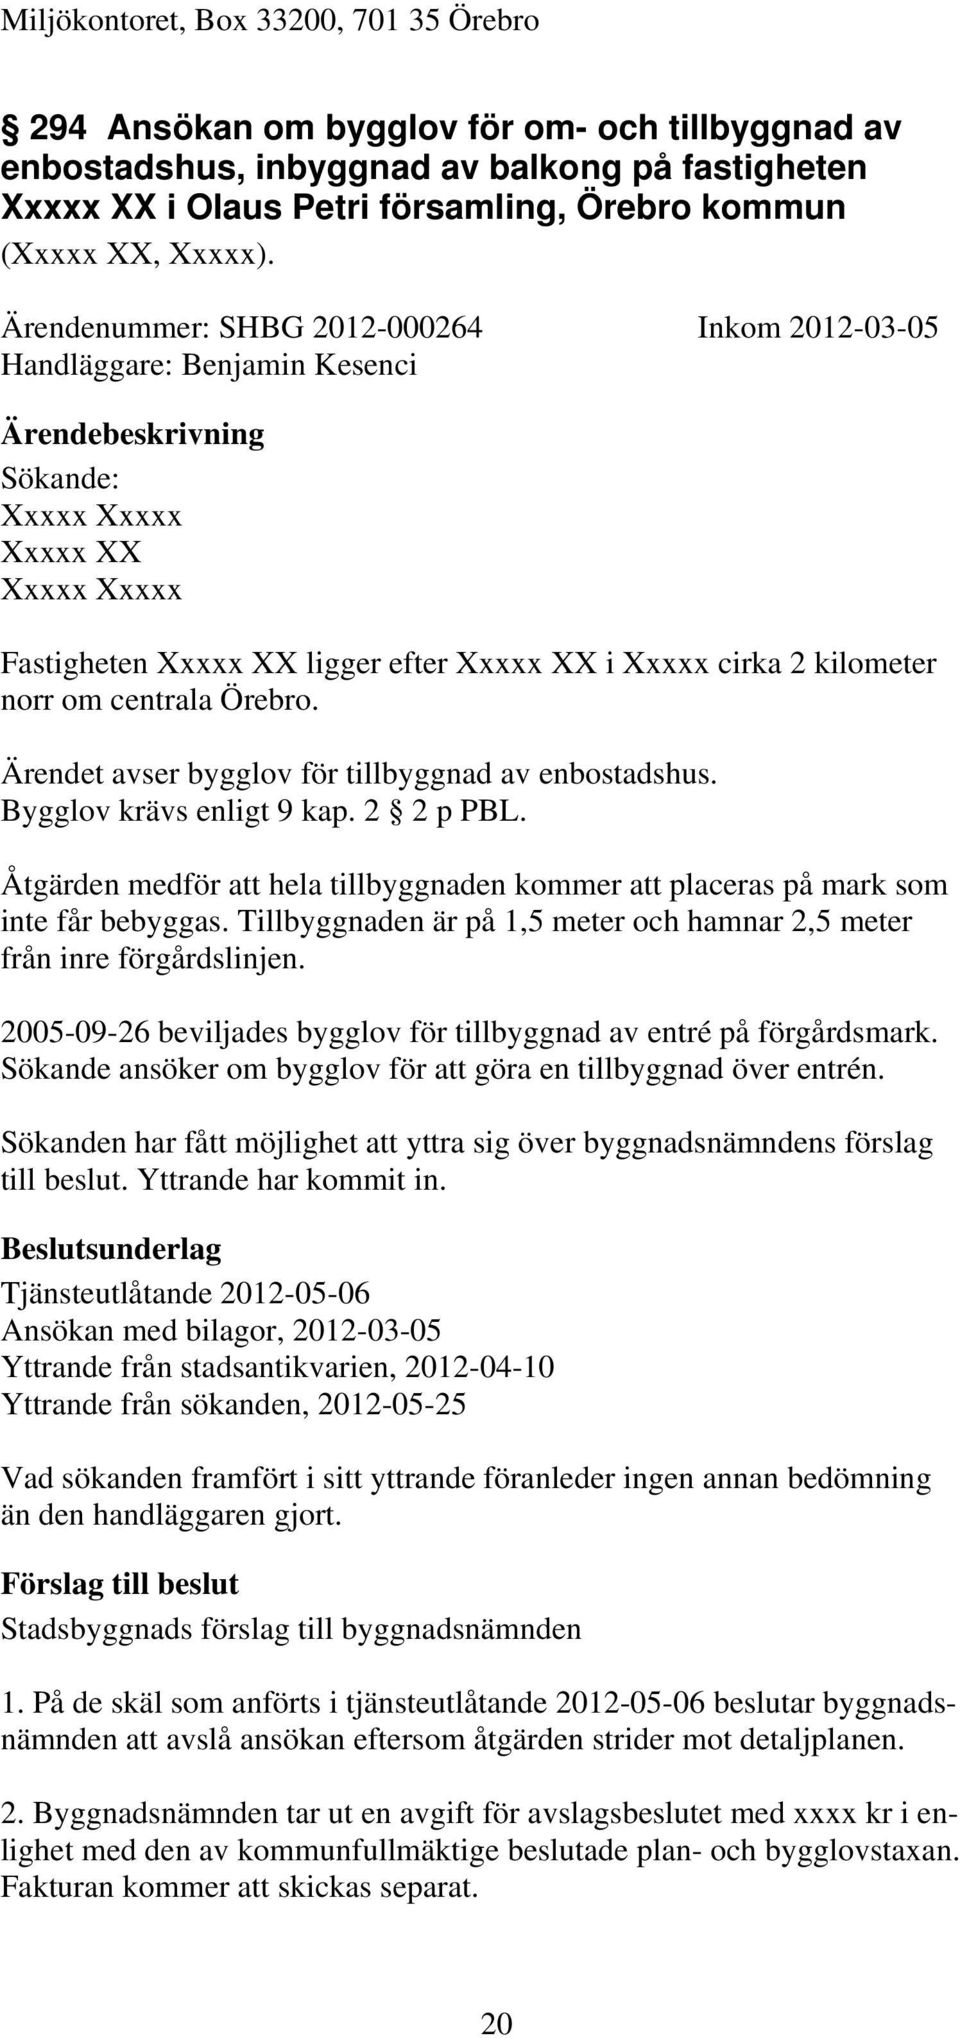 Ärendenummer: SHBG 2012-000264 Inkom 2012-03-05 Handläggare: Benjamin Kesenci Sökande: Xxxxx Xxxxx Xxxxx XX Xxxxx Xxxxx Fastigheten Xxxxx XX ligger efter Xxxxx XX i Xxxxx cirka 2 kilometer norr om